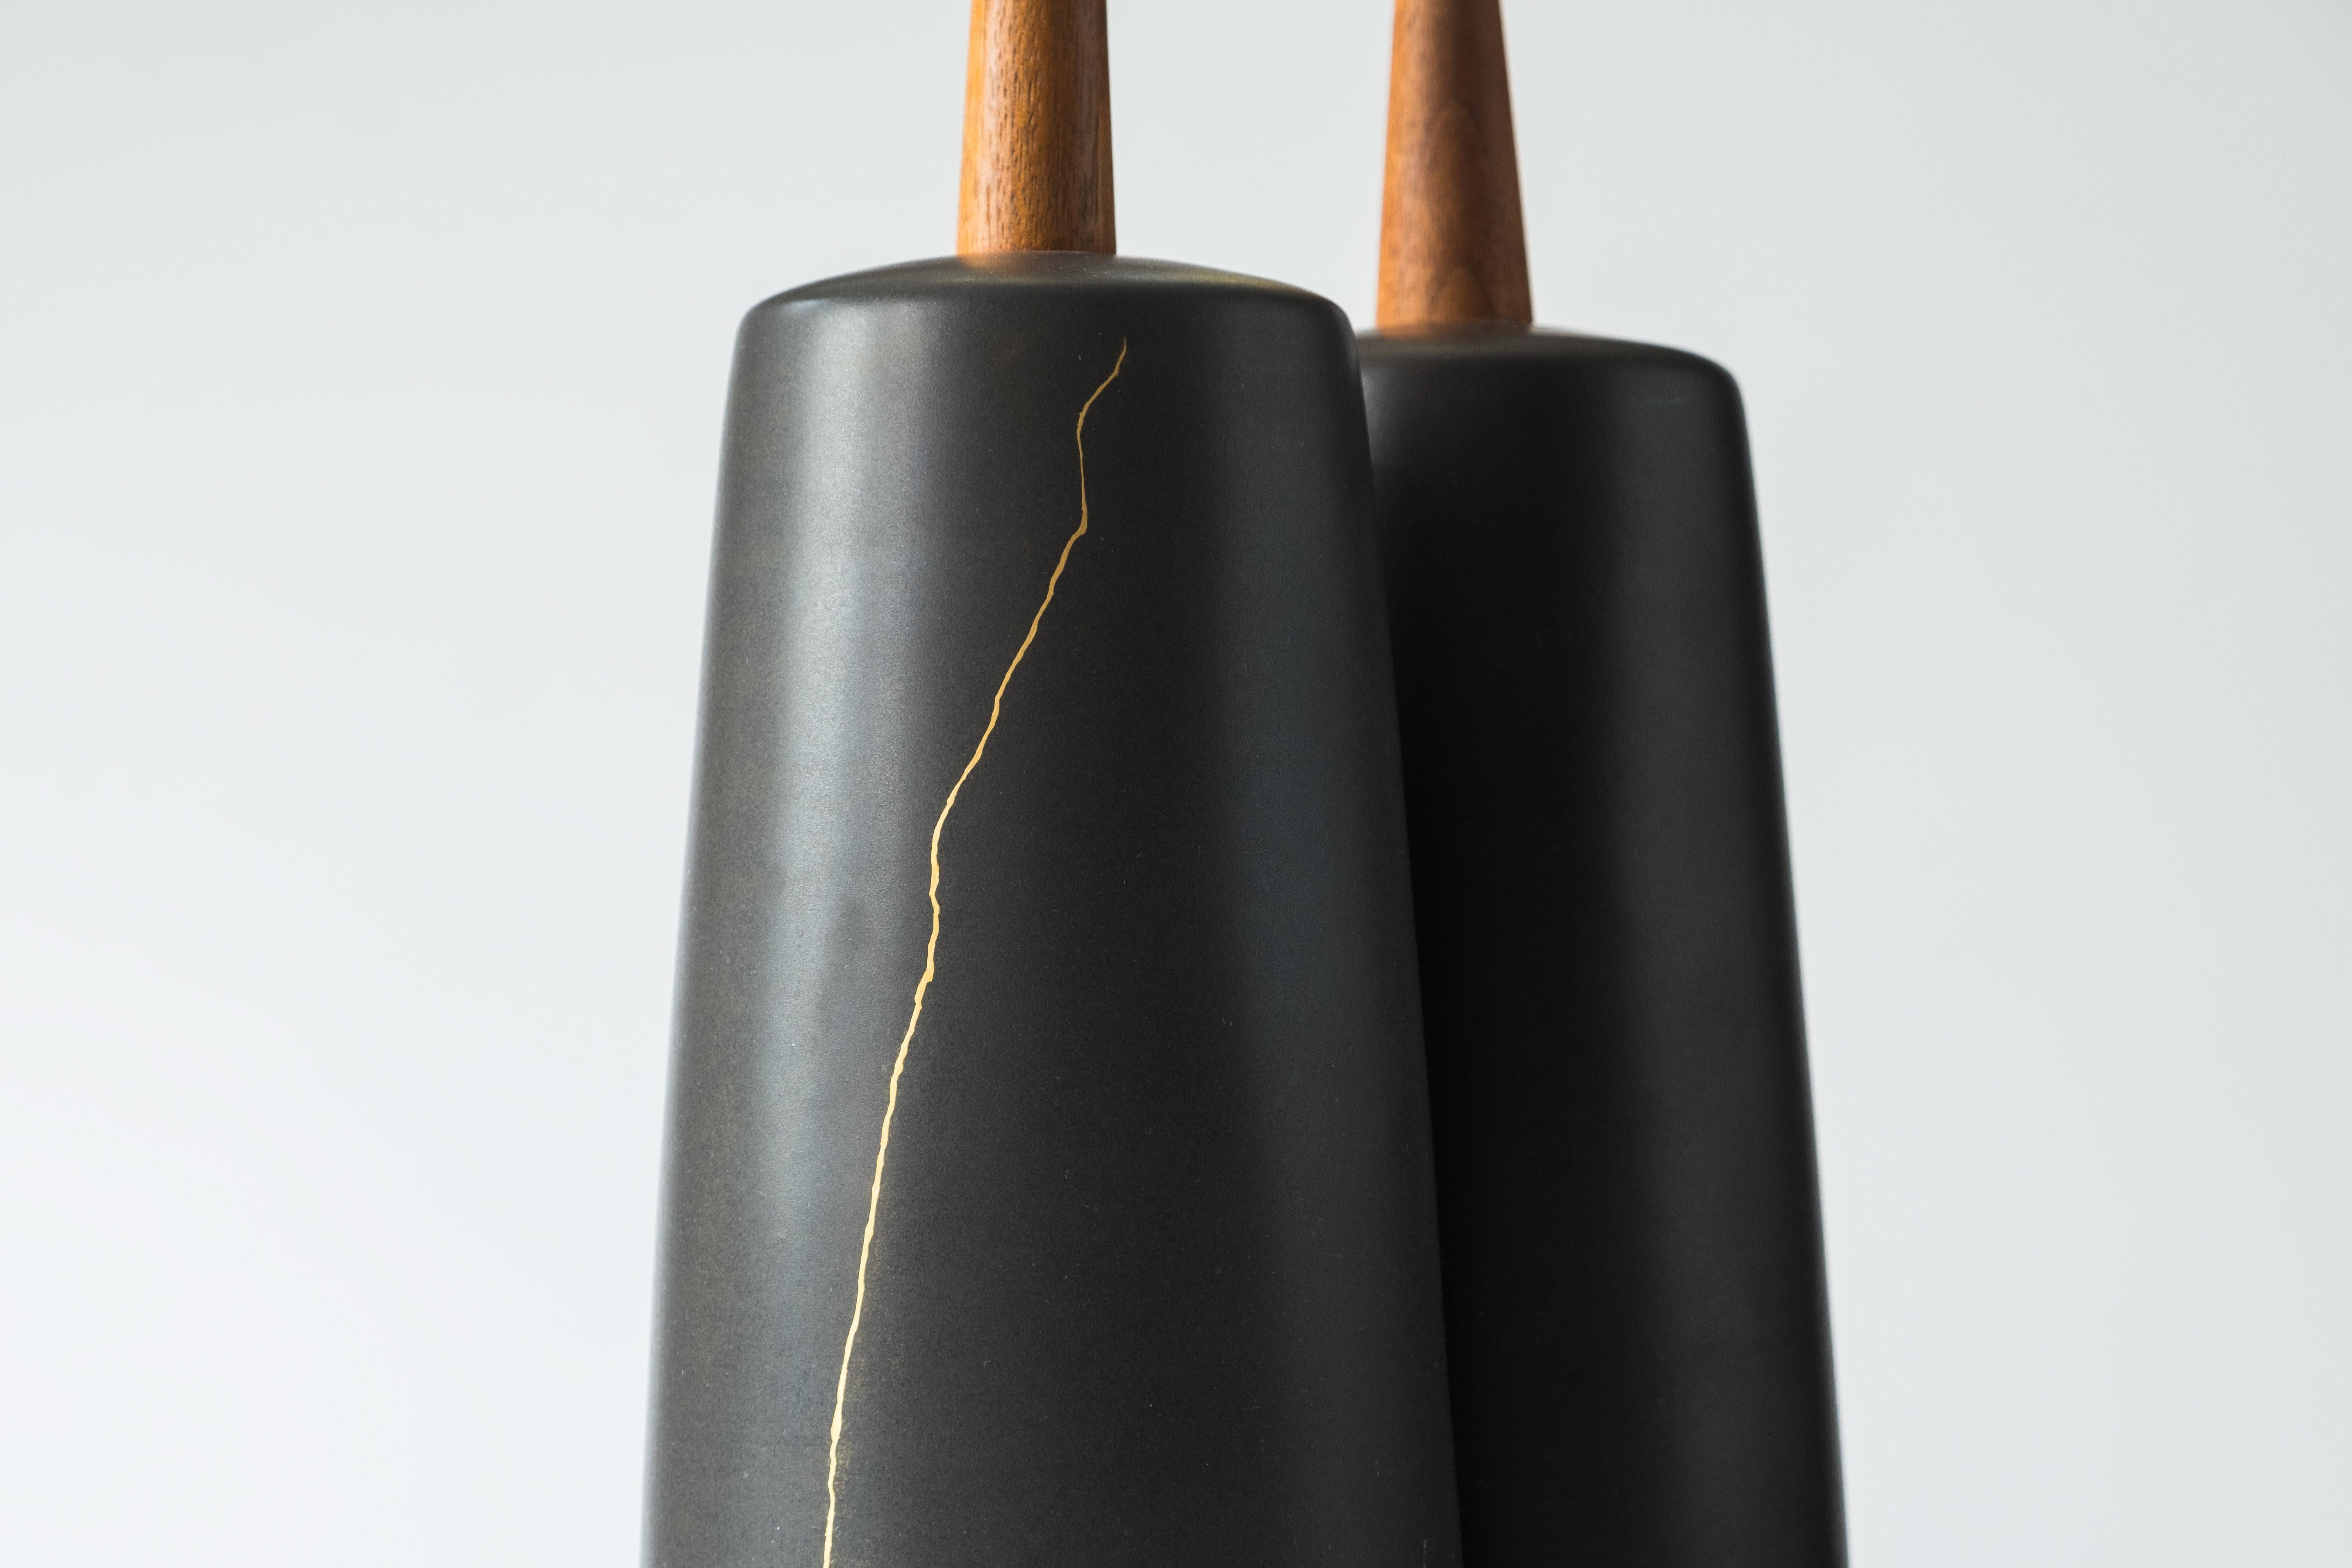 Gordon & Jane Martz / Marshall Studios Ceramic Table Lamps, Matte Black Glaze 2